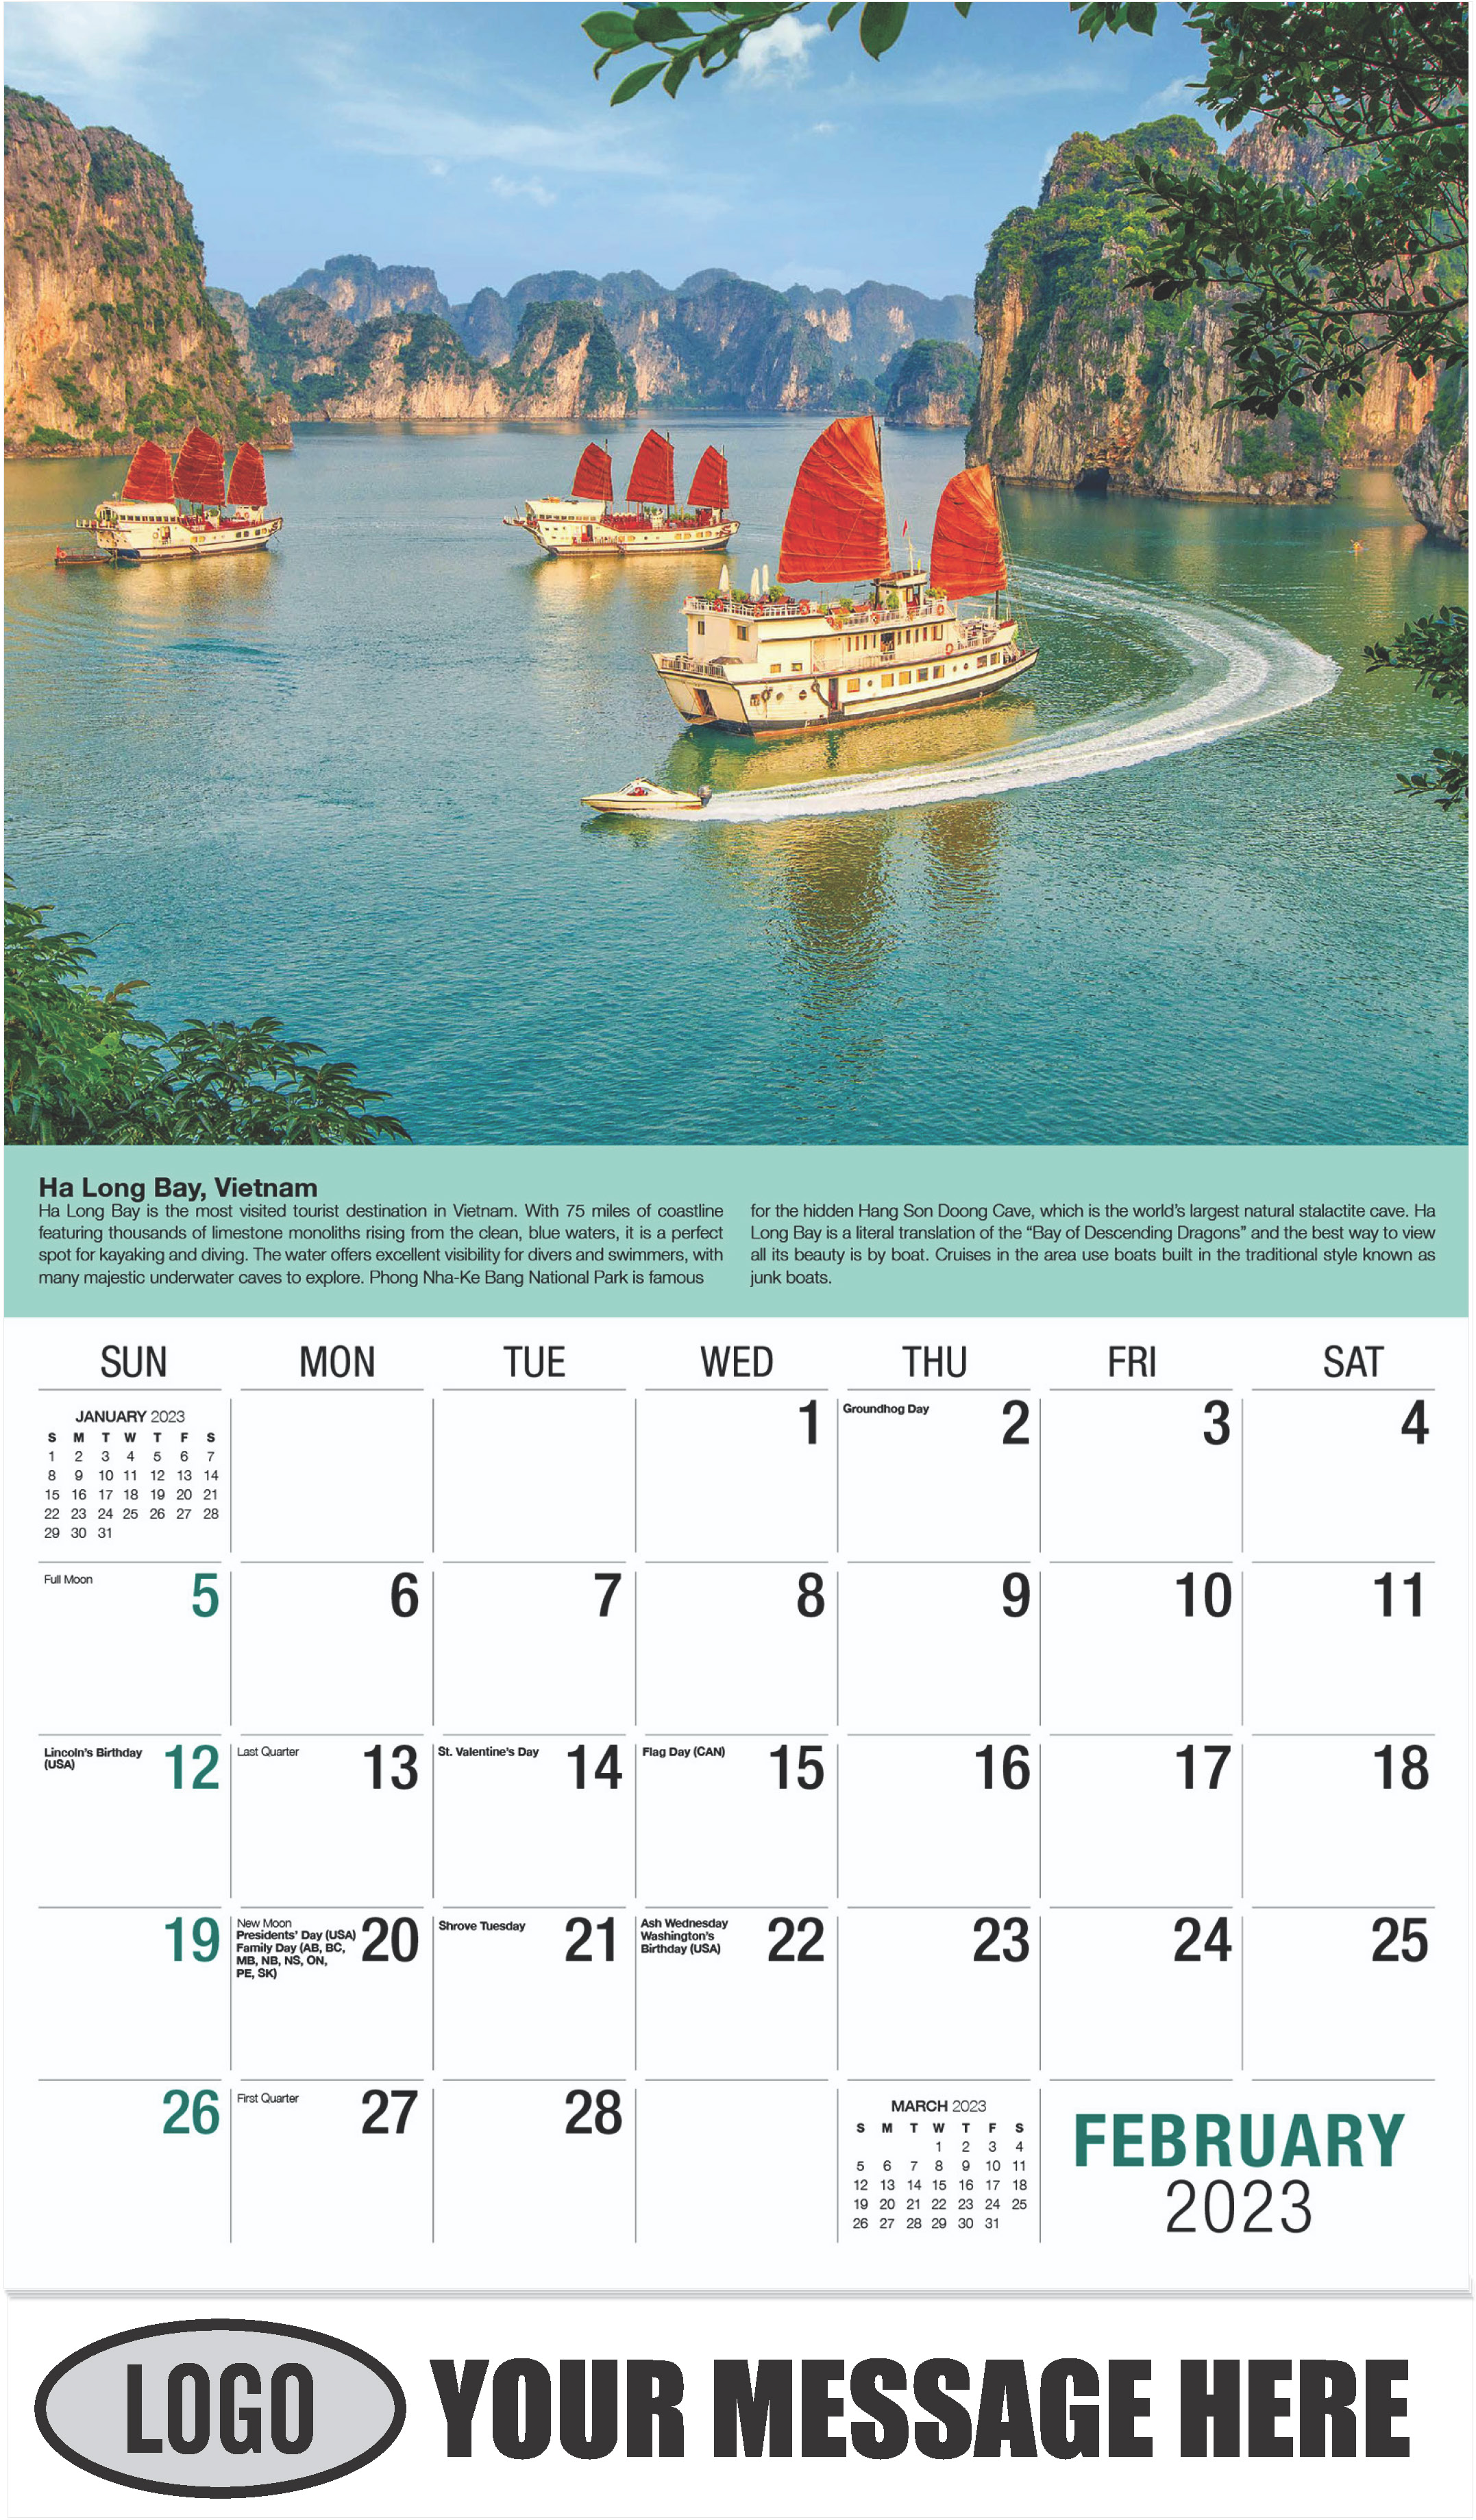 Ha Long bay, Quang Ninh, Vietnam - February - World Travel 2023 Promotional Calendar